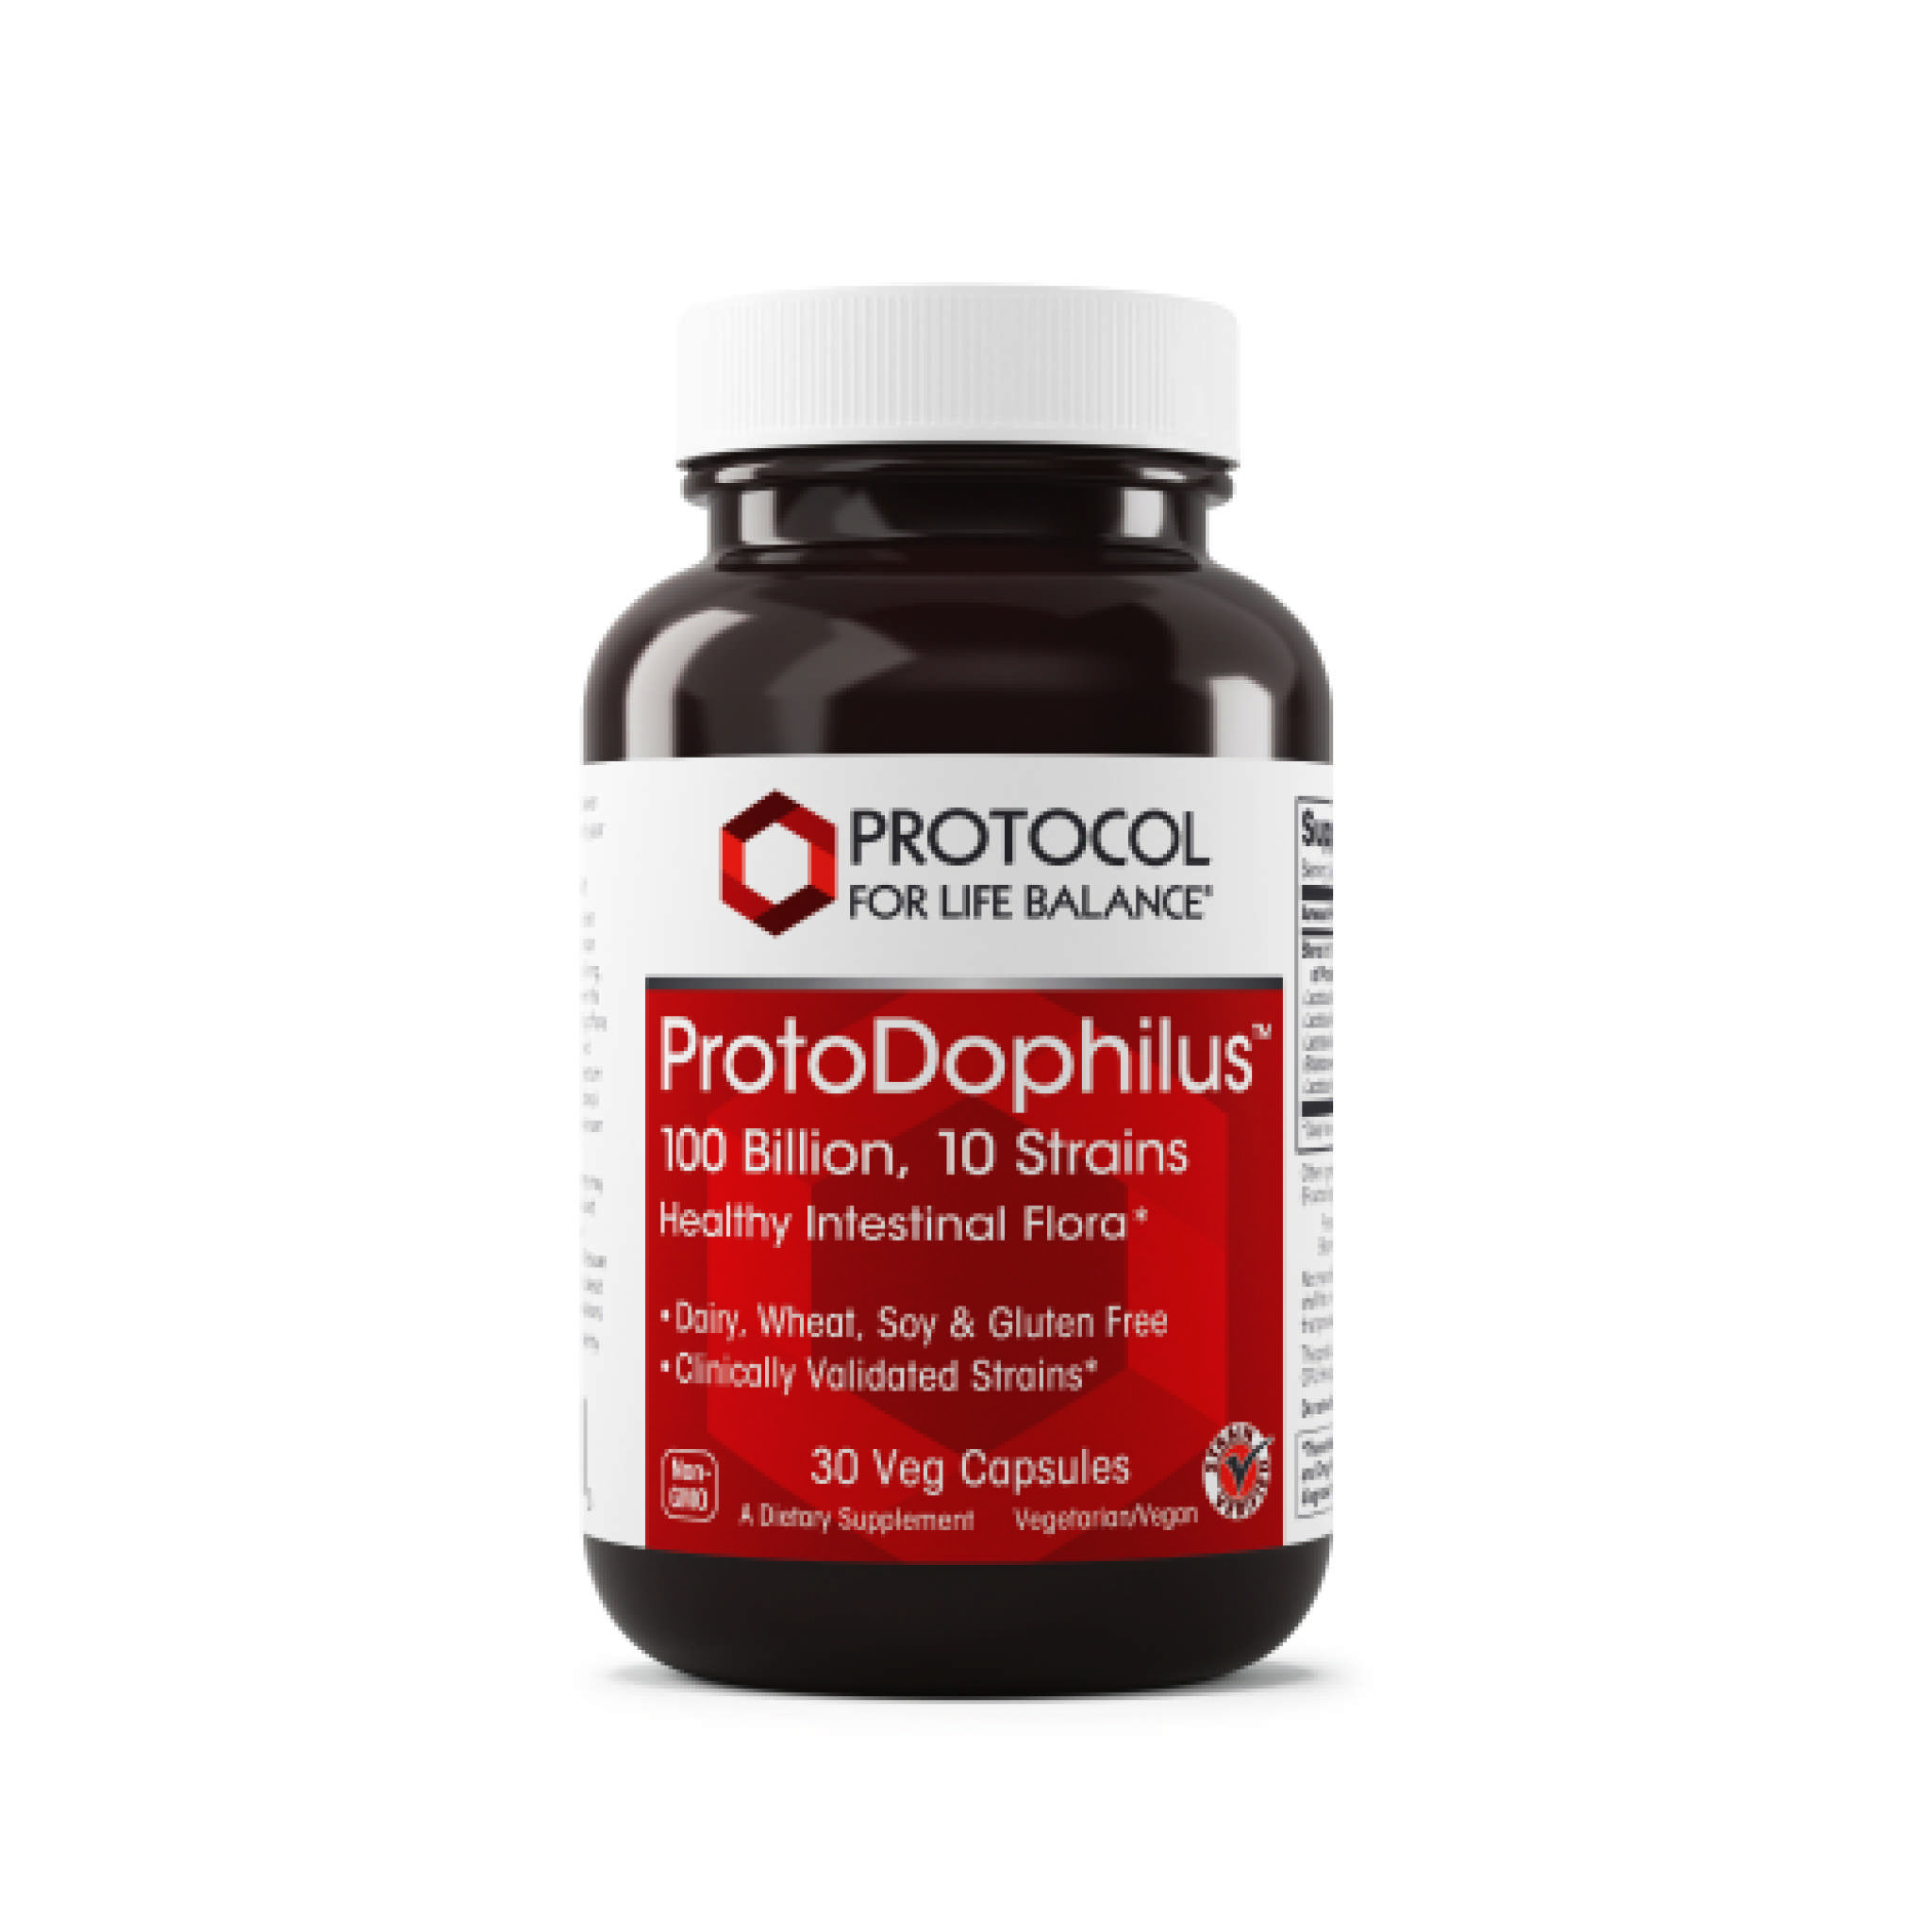 Protocol For Life Balance - Protodophilus 100 Billion